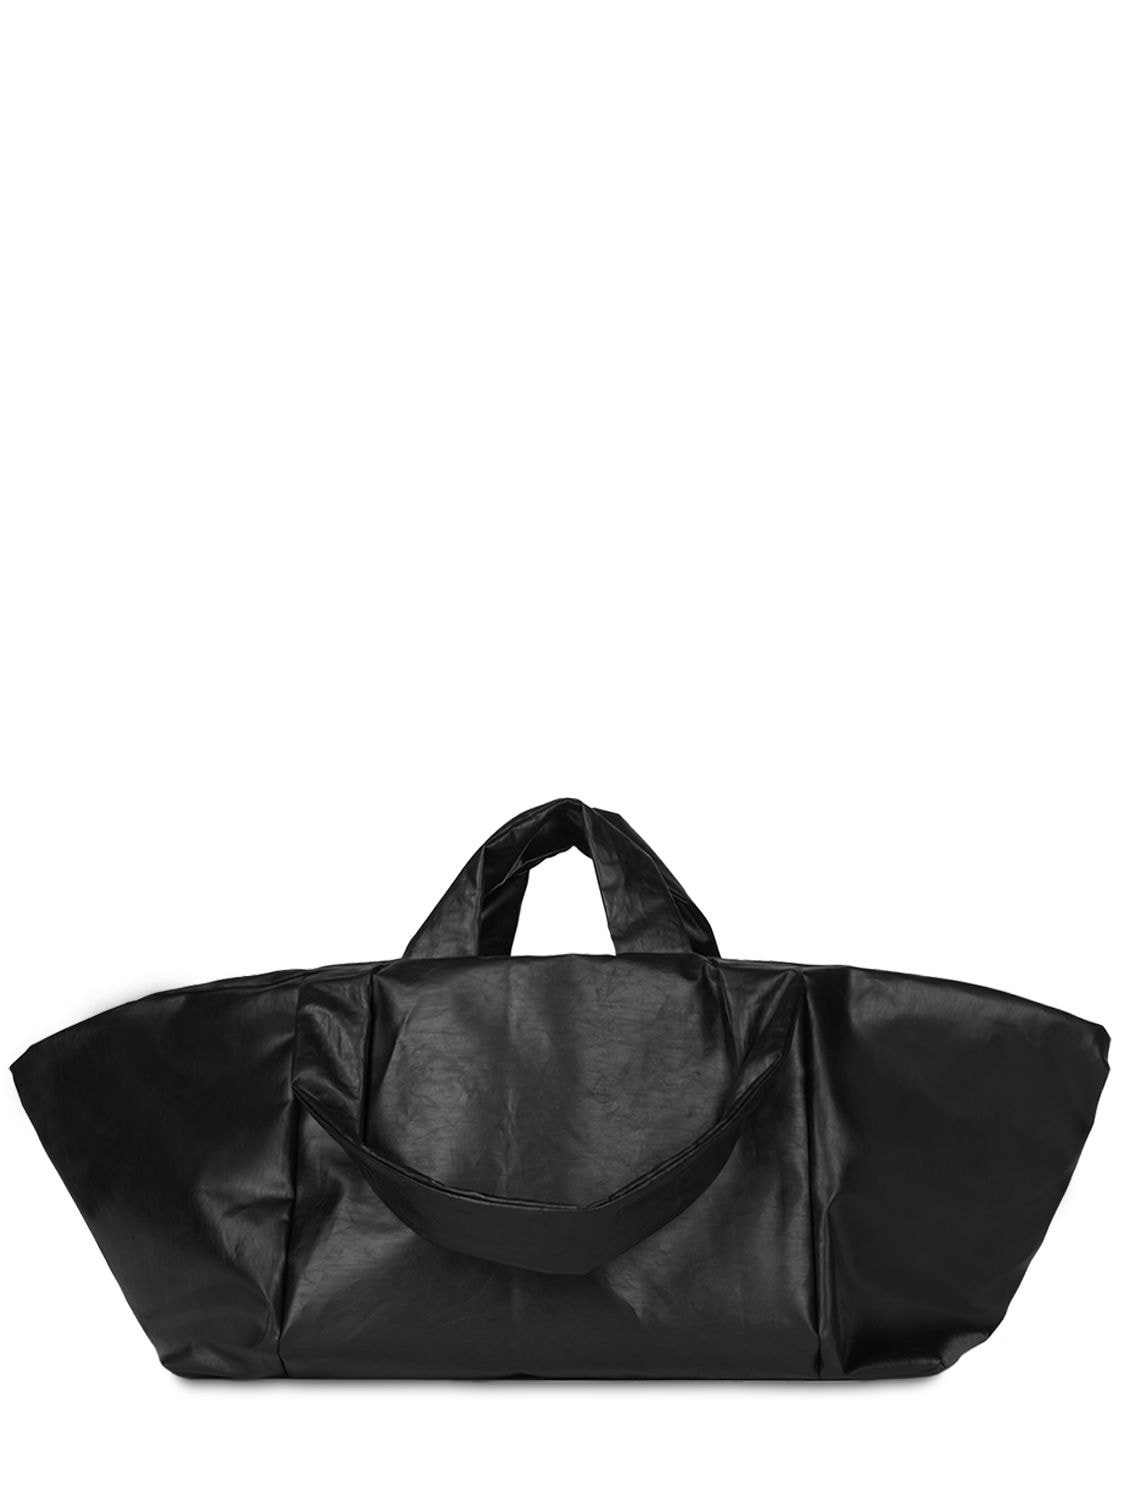 Kassl Editions Medium Oil Tote Bag In Black